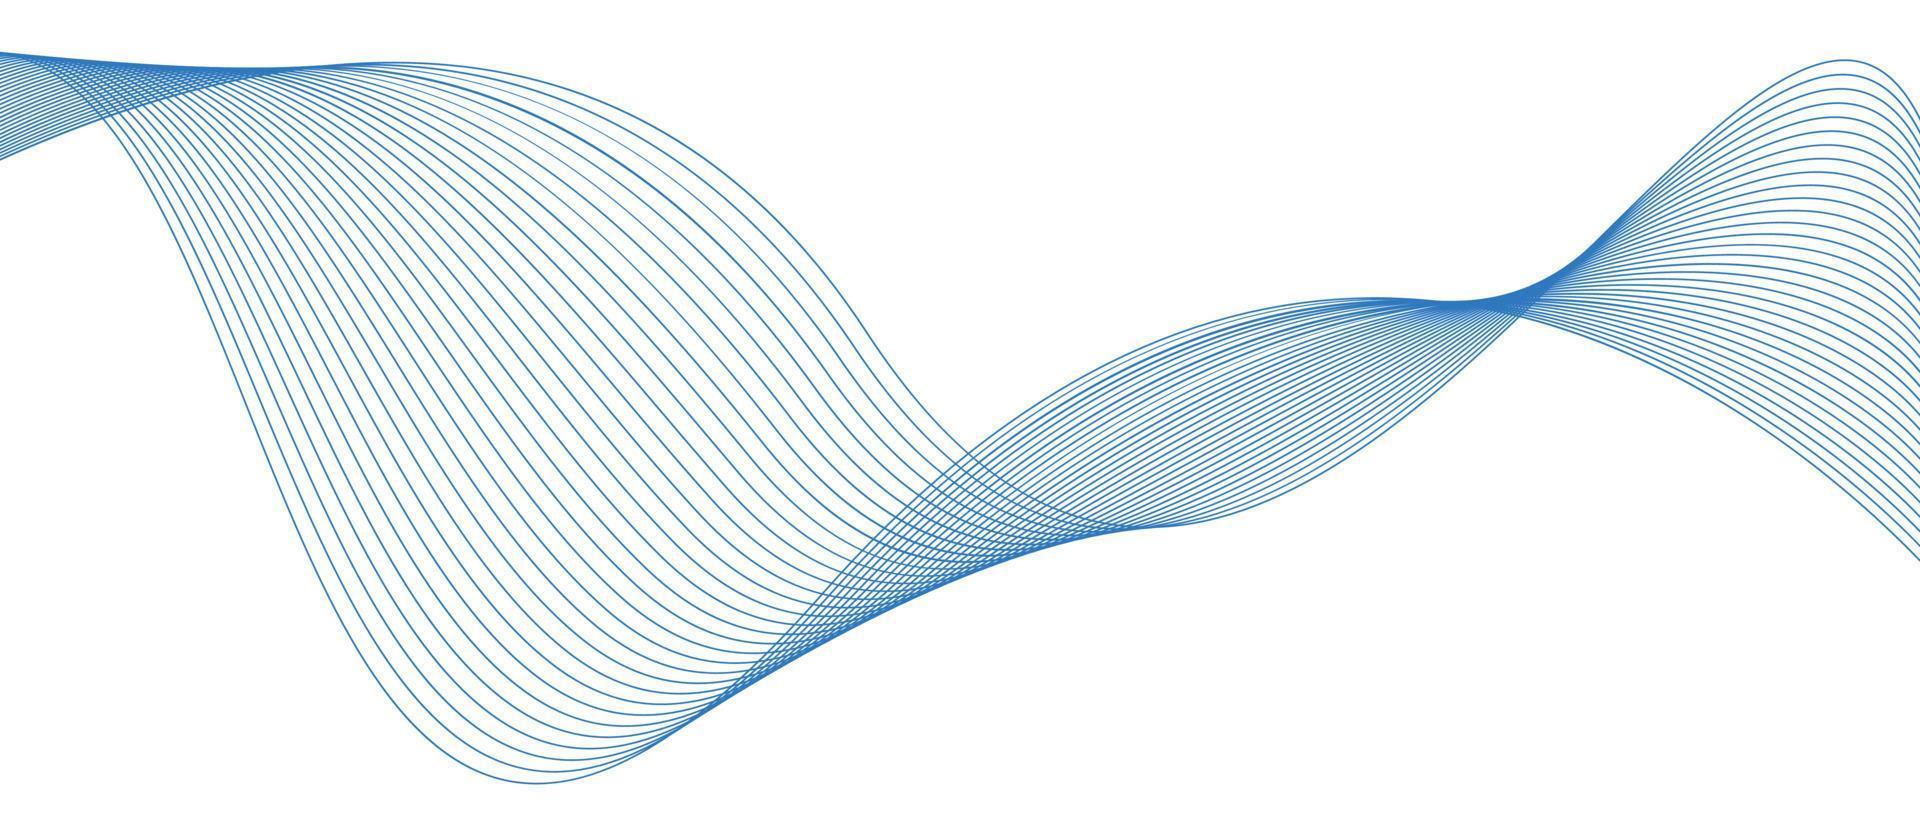 líneas de fondo abstracto con rayas. línea topográfica redonda abstracta. patrón de rayas sin costuras de textura. fondo vectorial vector